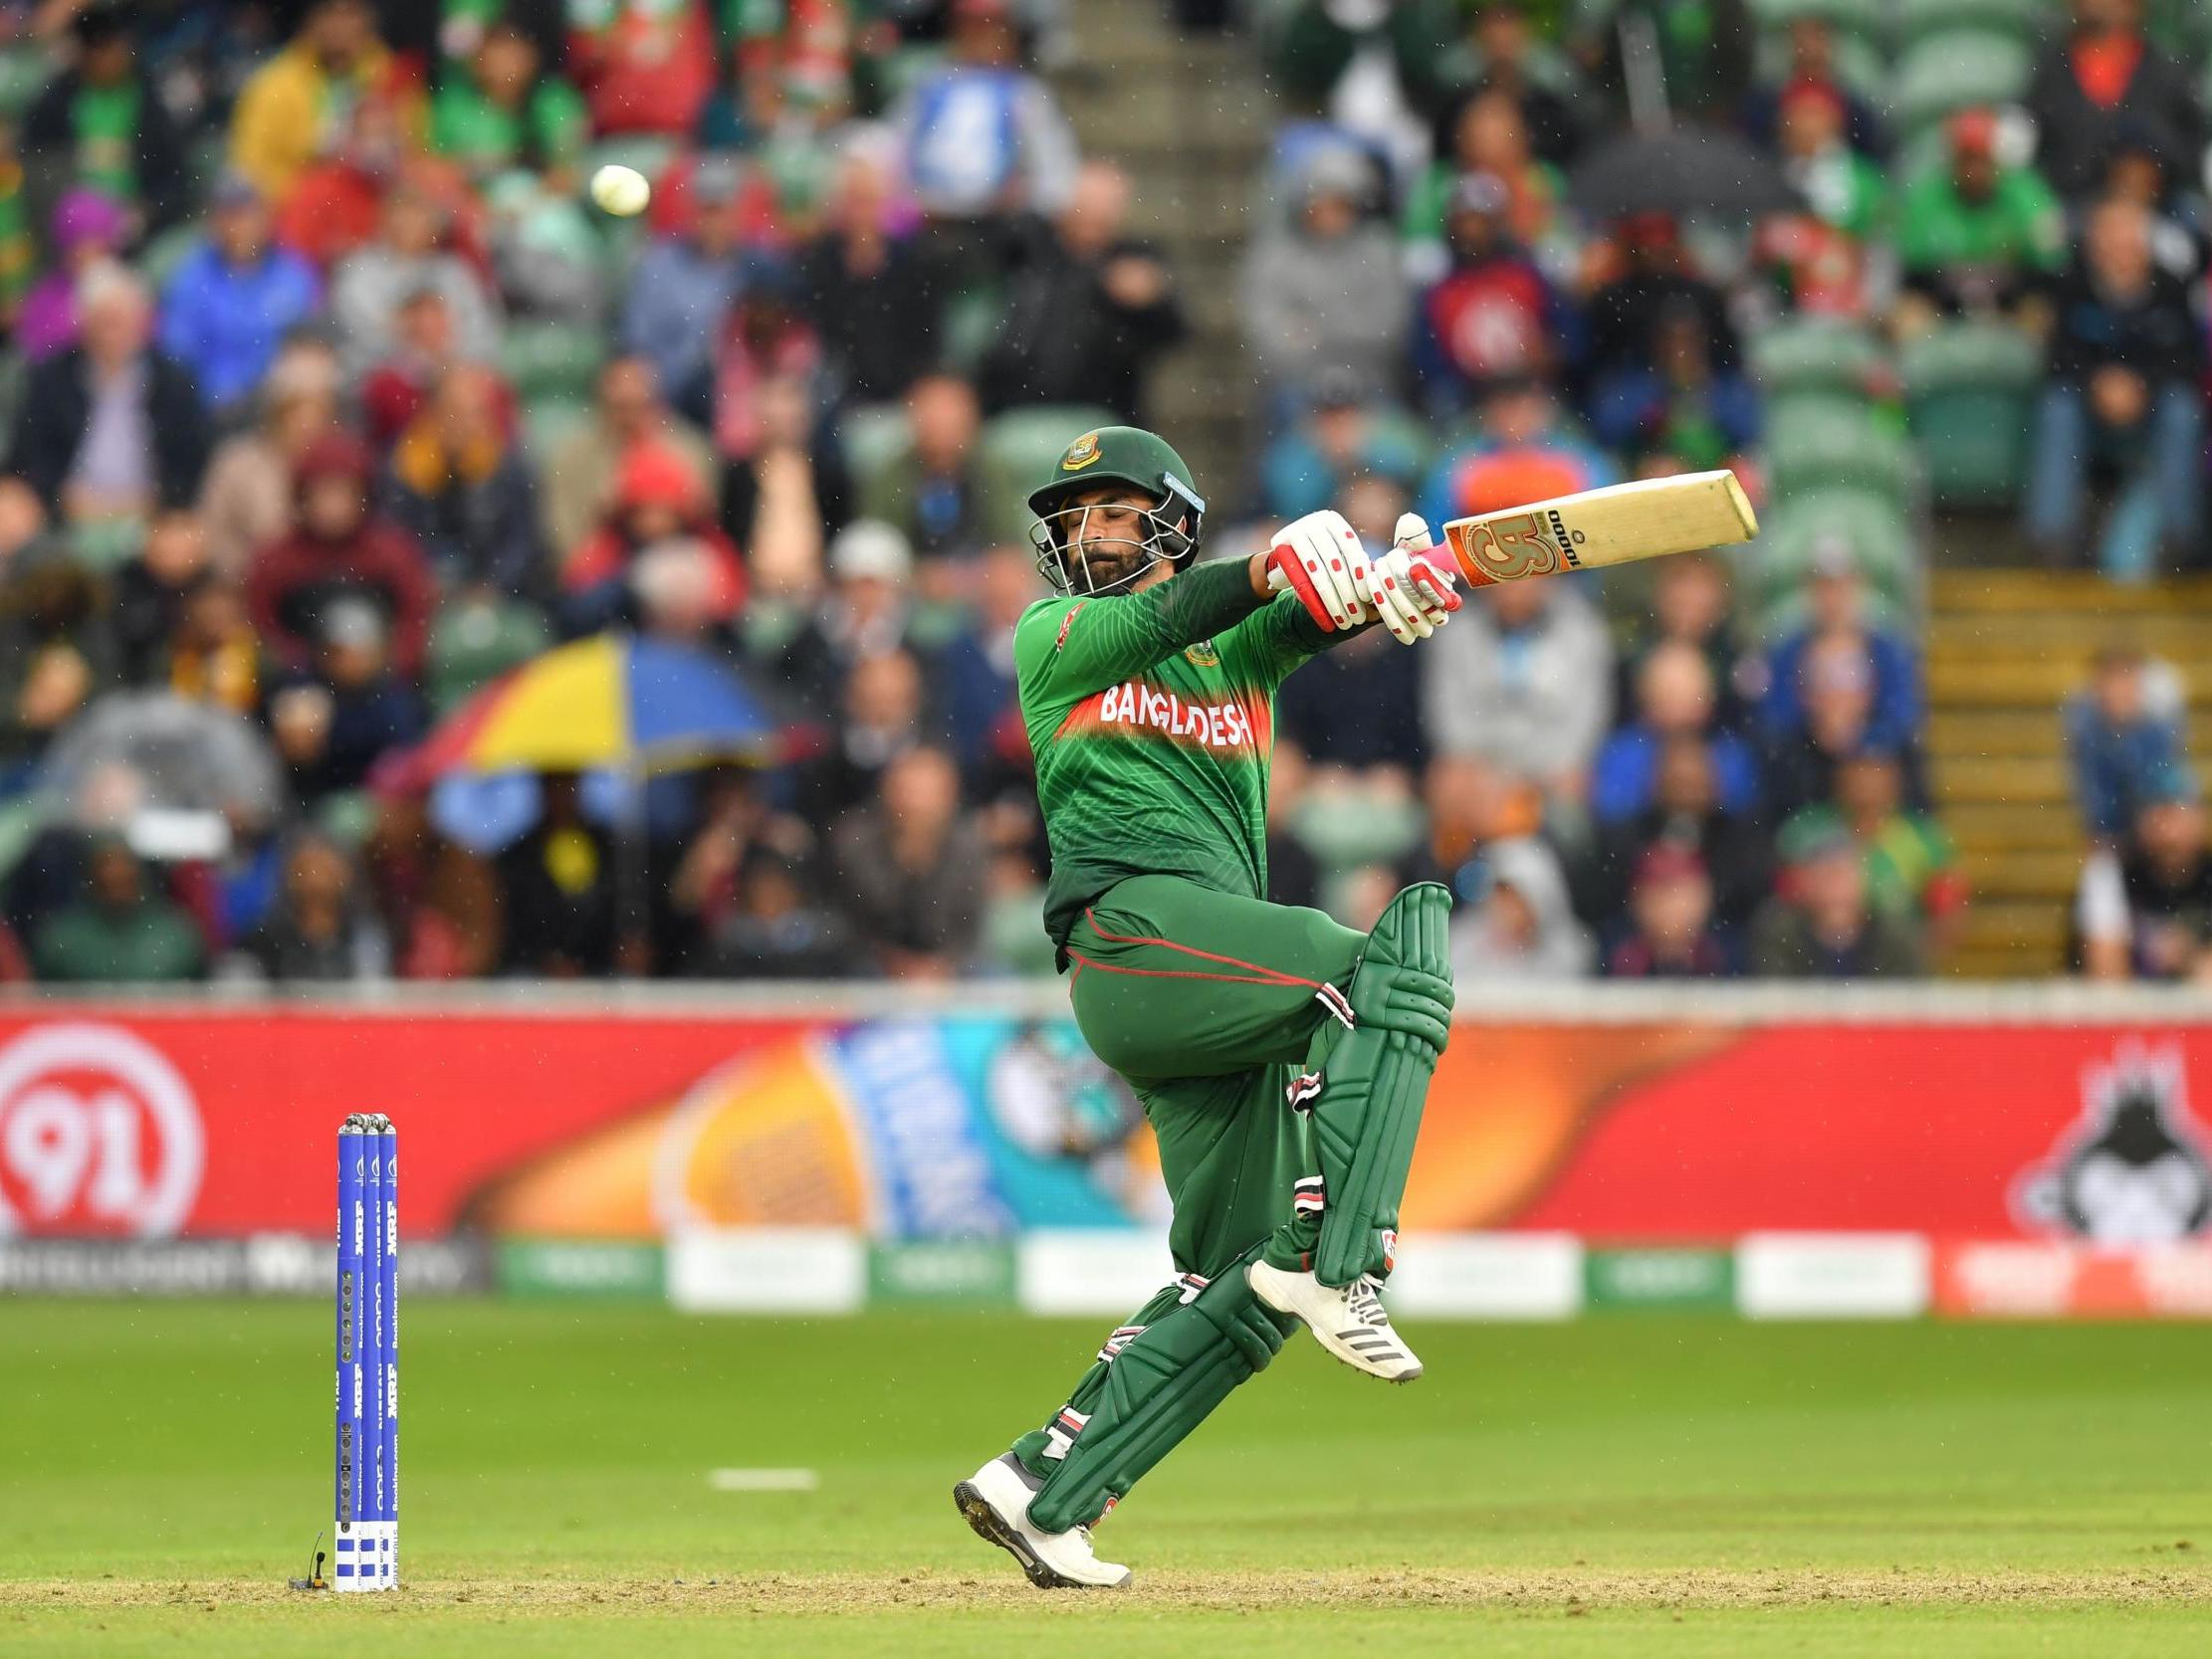 Tamim Iqbal plays a shot during Bangladesh's innings